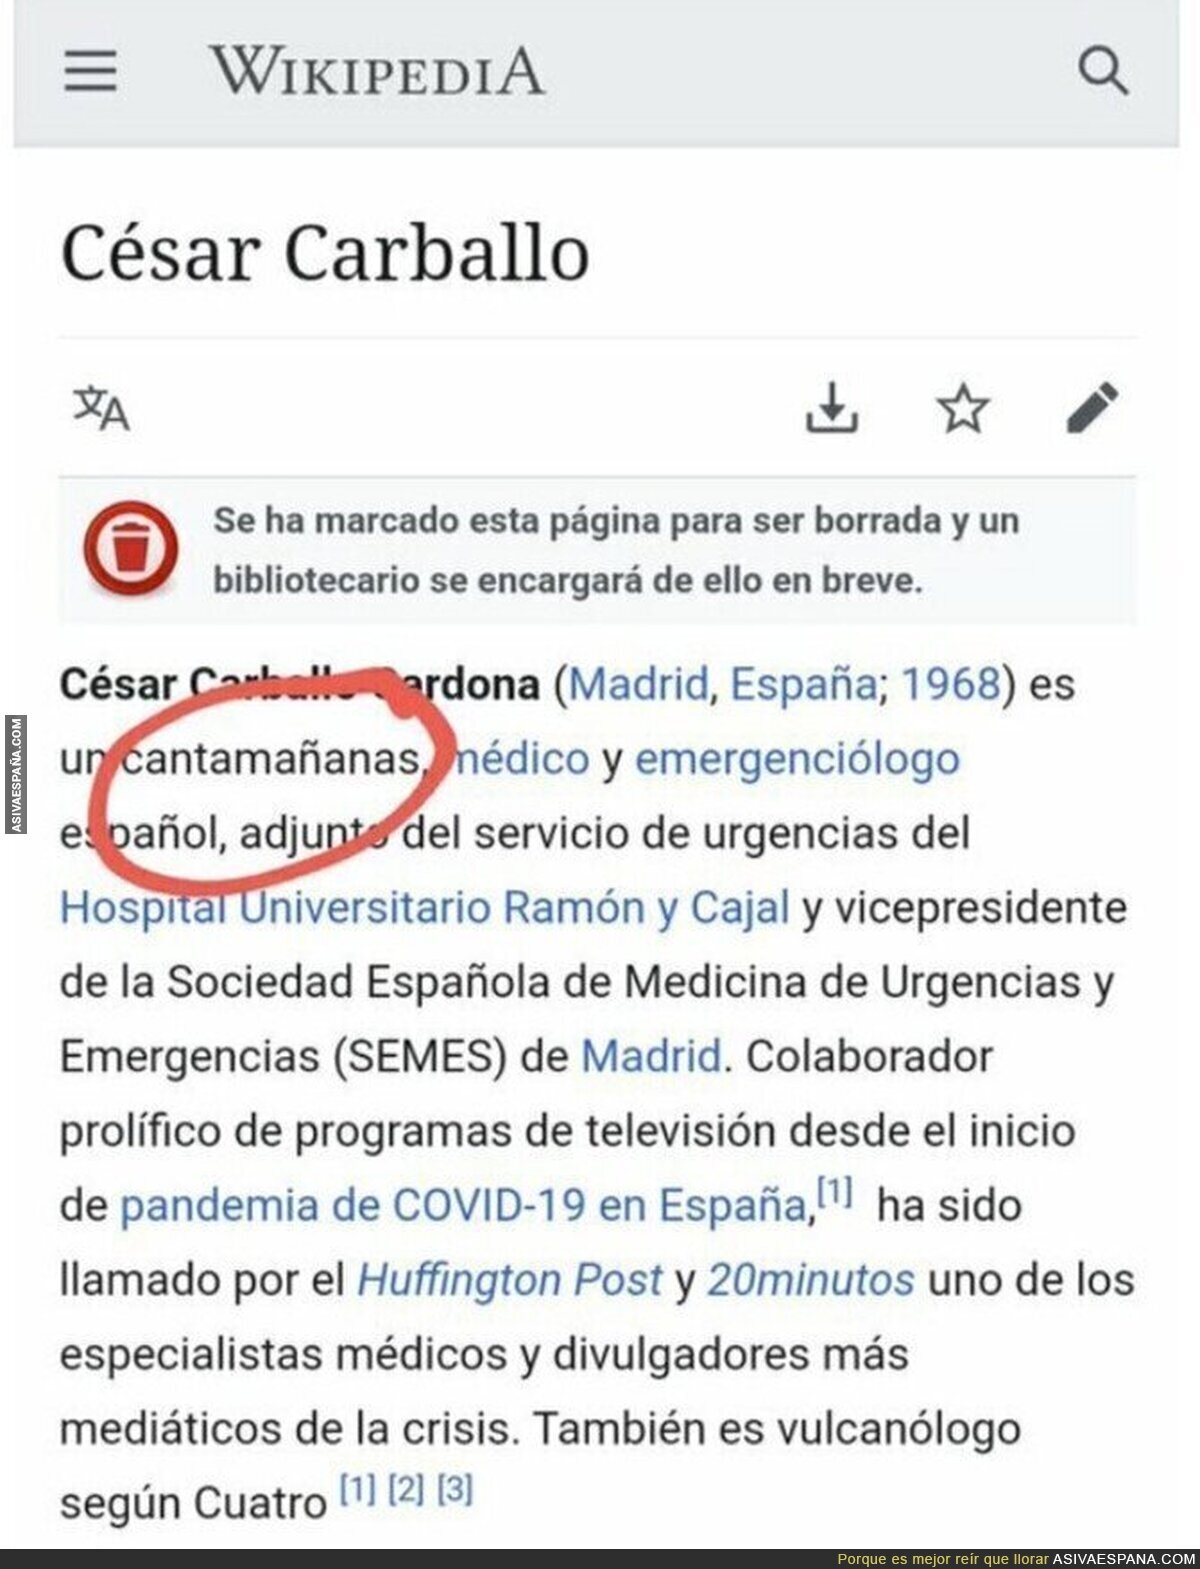 La Wikipedia de César Carballo se ha descontrolado